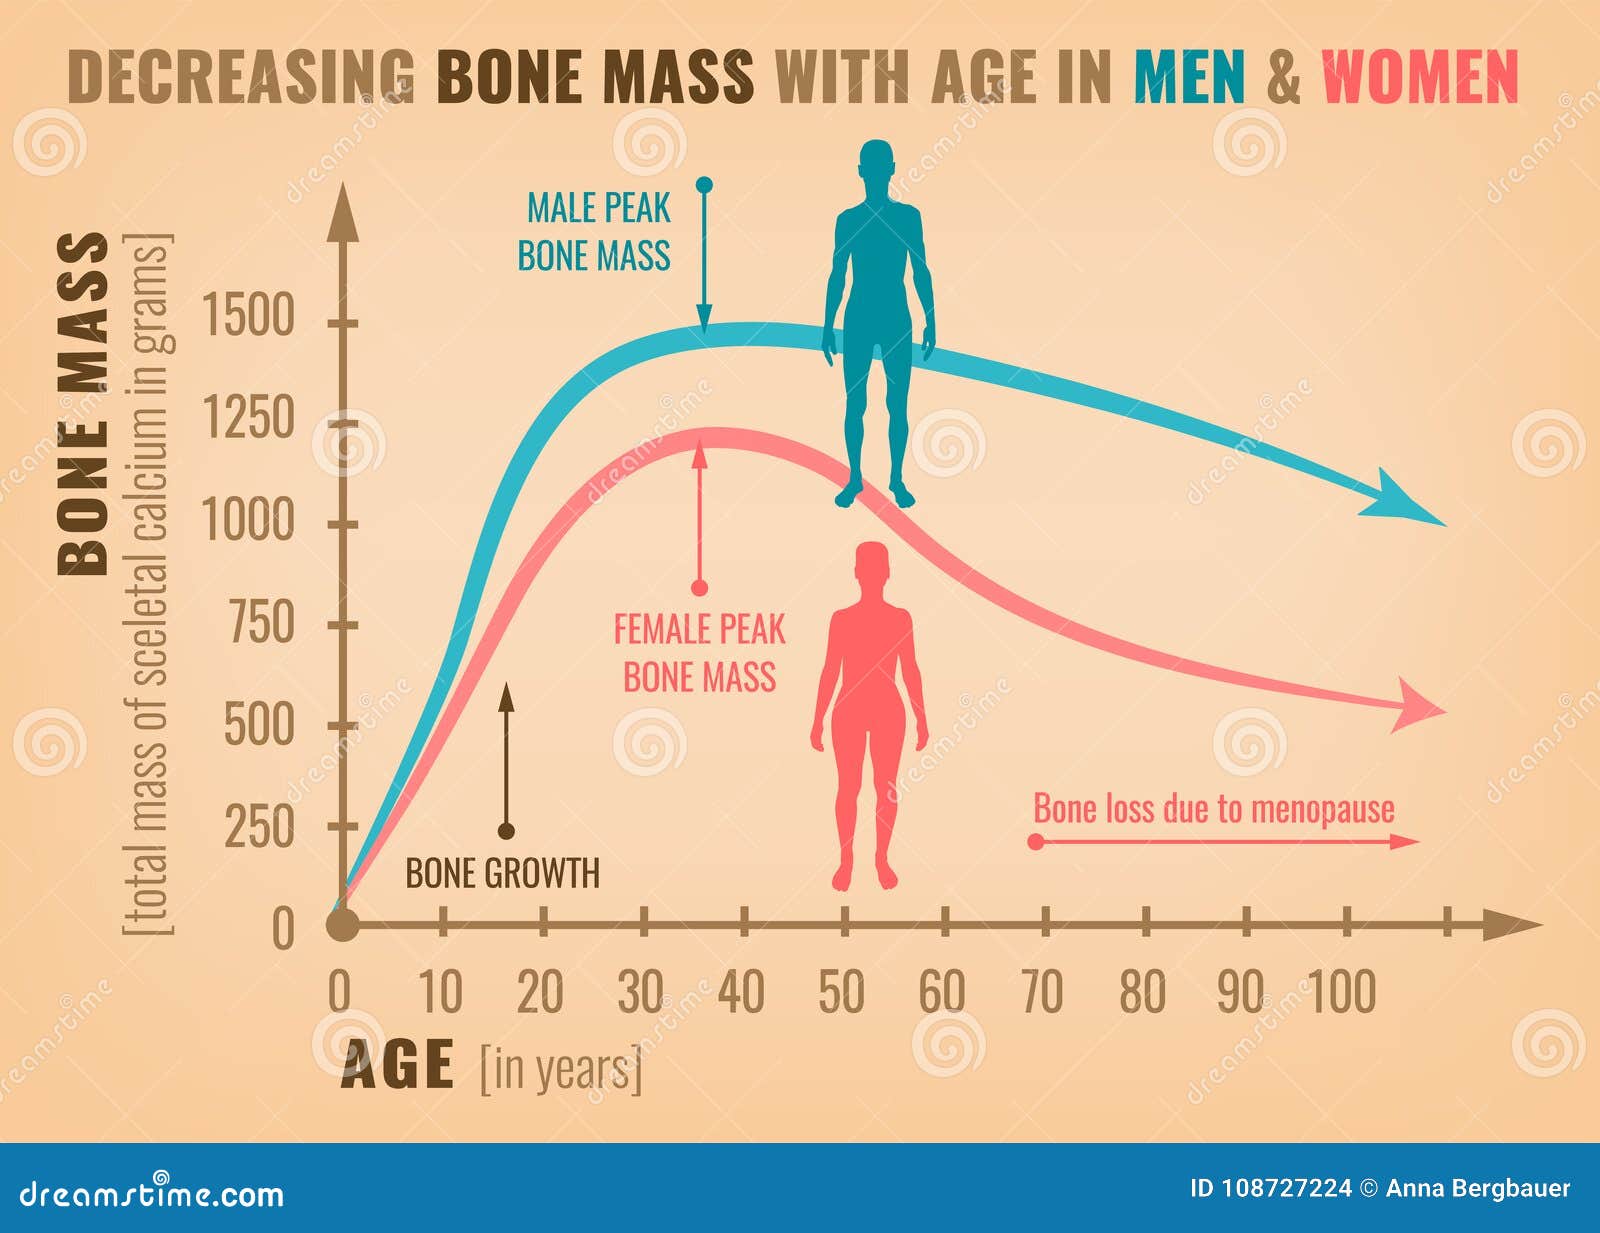 decreasing-bone-mass-age-men-women-detailed-infographic-beige-pink-blue-colors-vector-illustration-healthcare-medicine-108727224.jpg